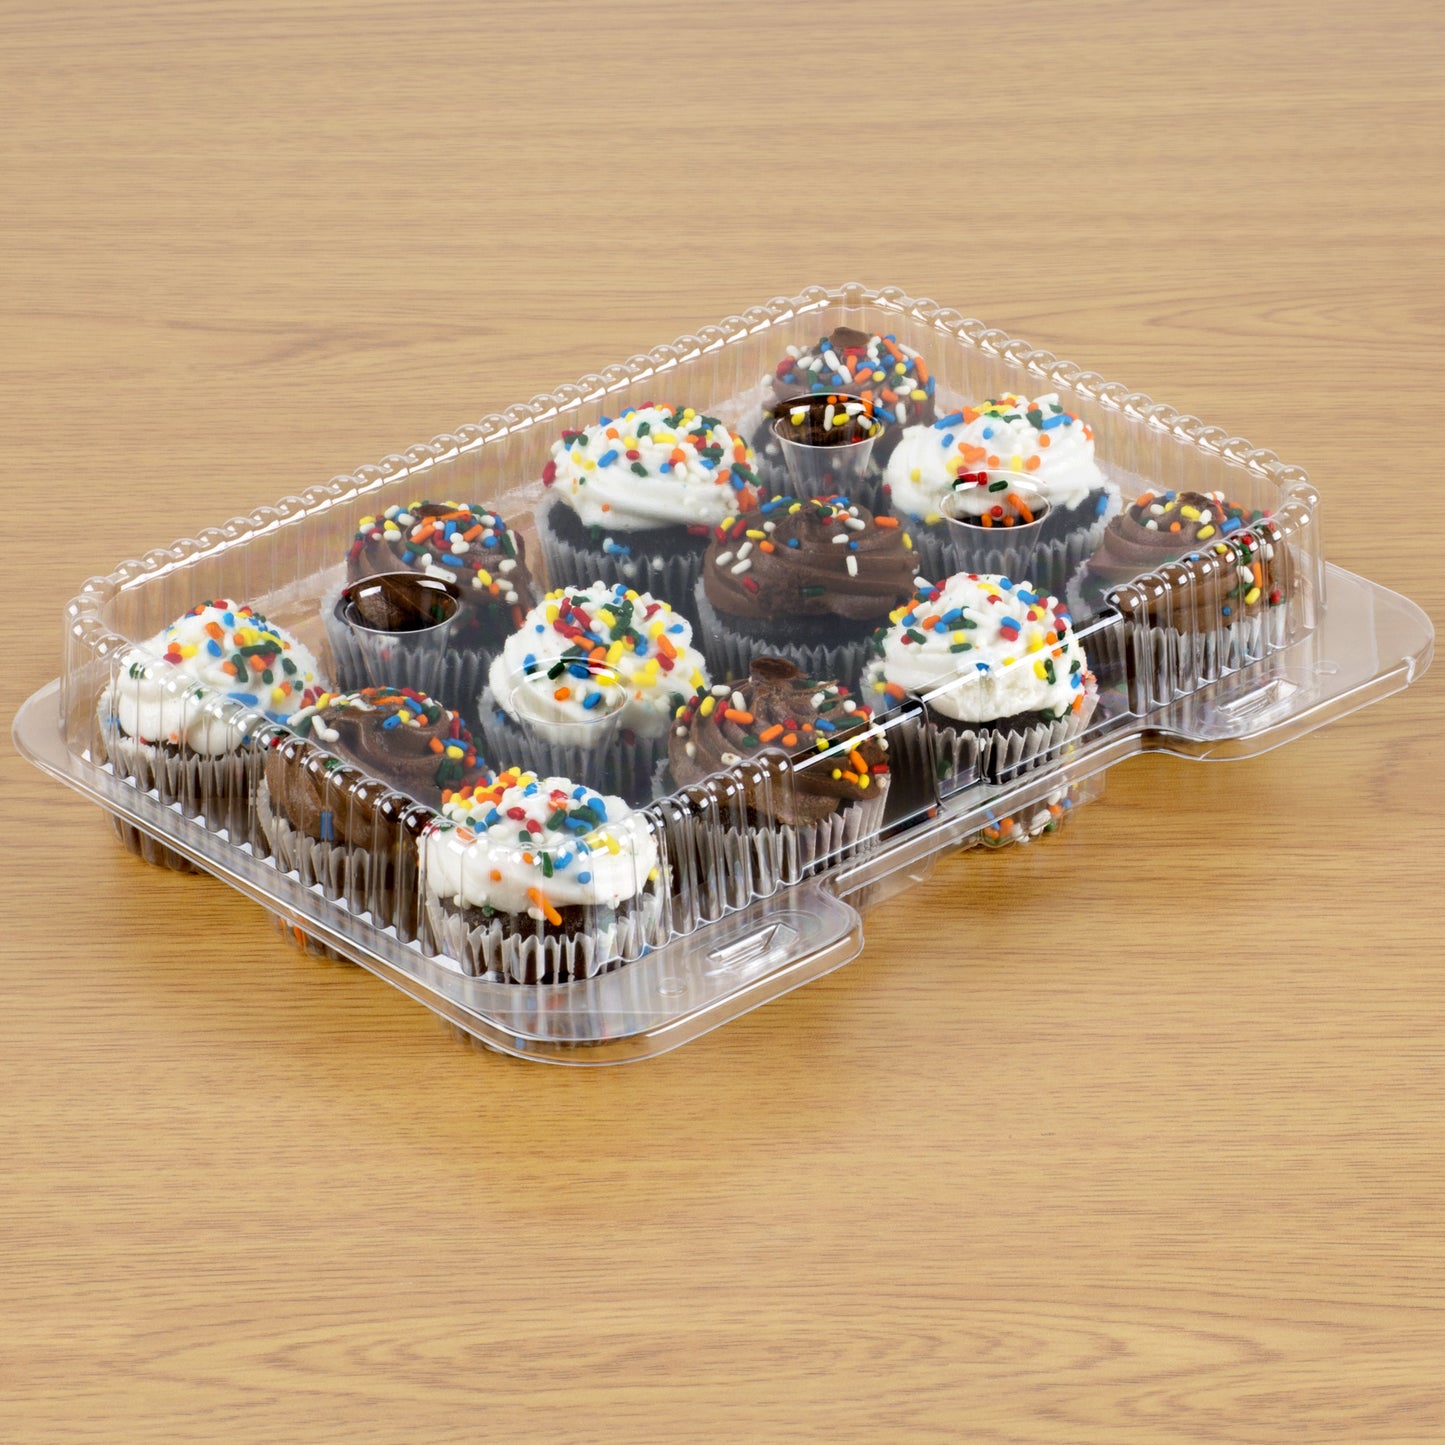 12 Count, Mini Size Plastic Cupcake Container